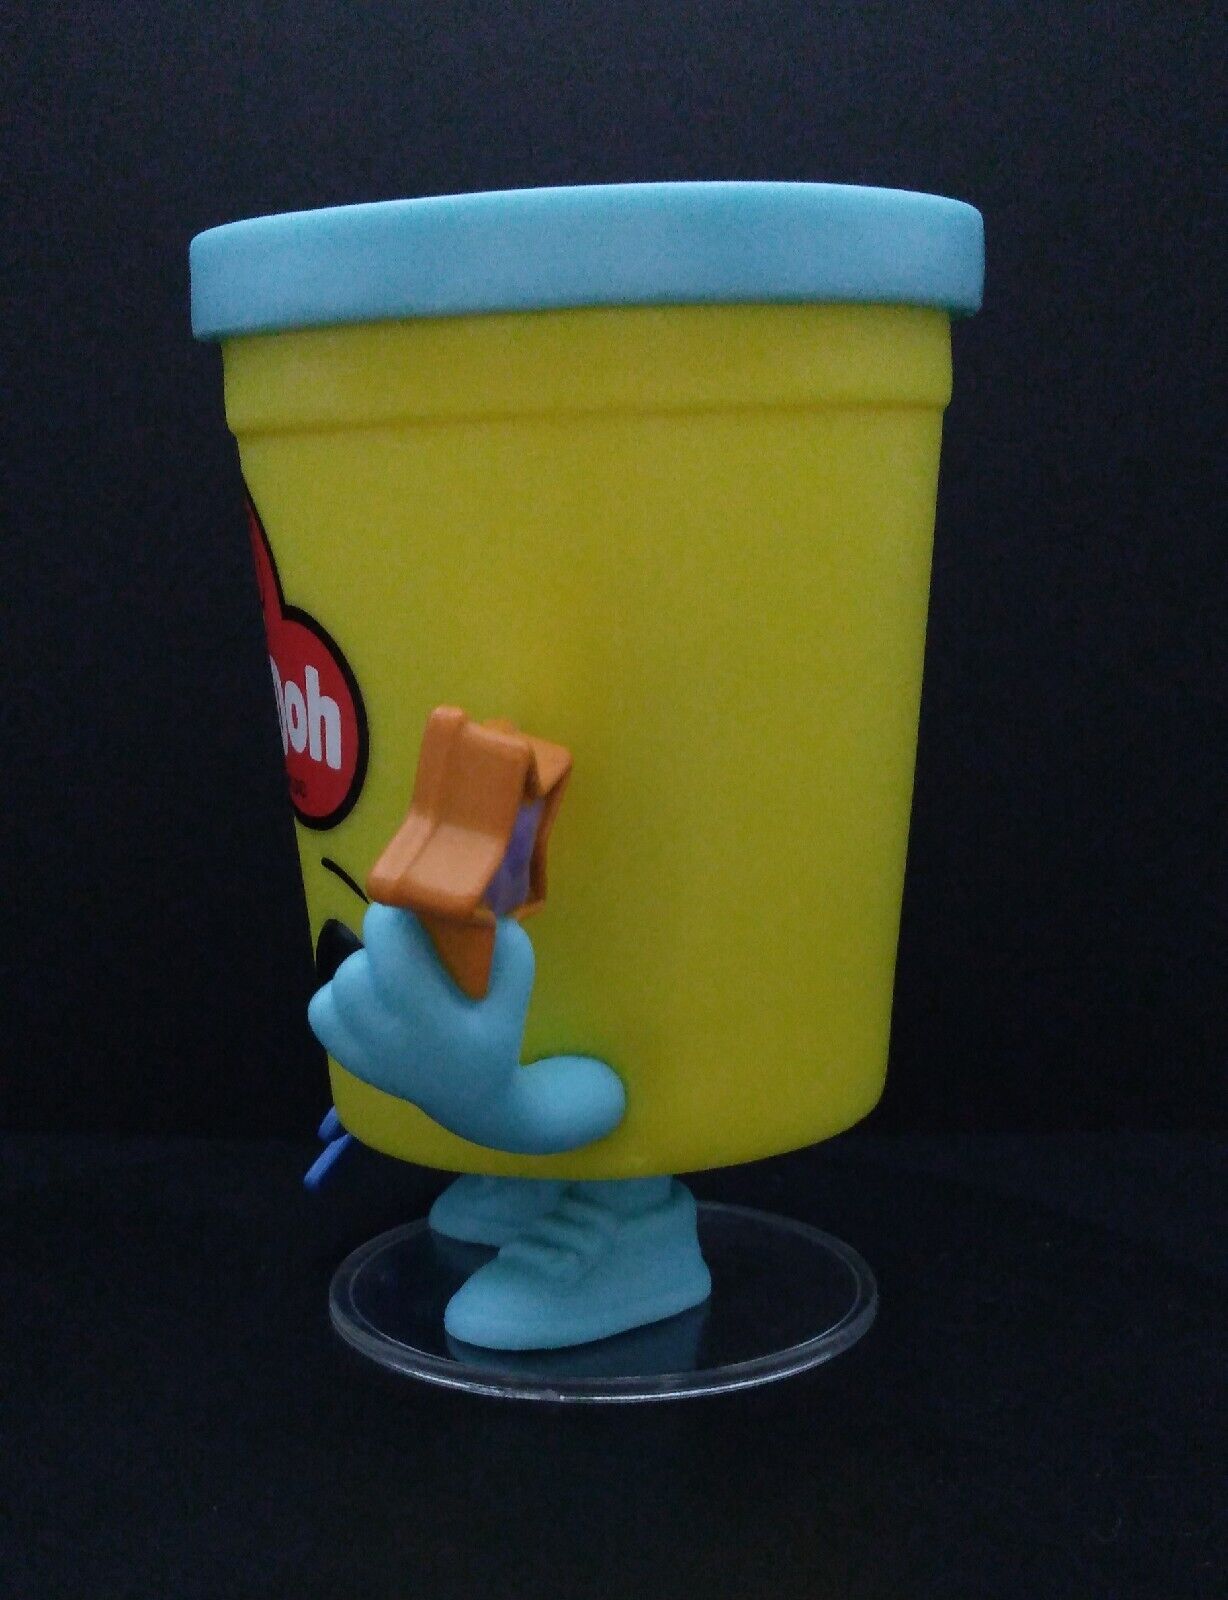 Figurine Funko Pop Pâte à modeler Play-Doh N°101